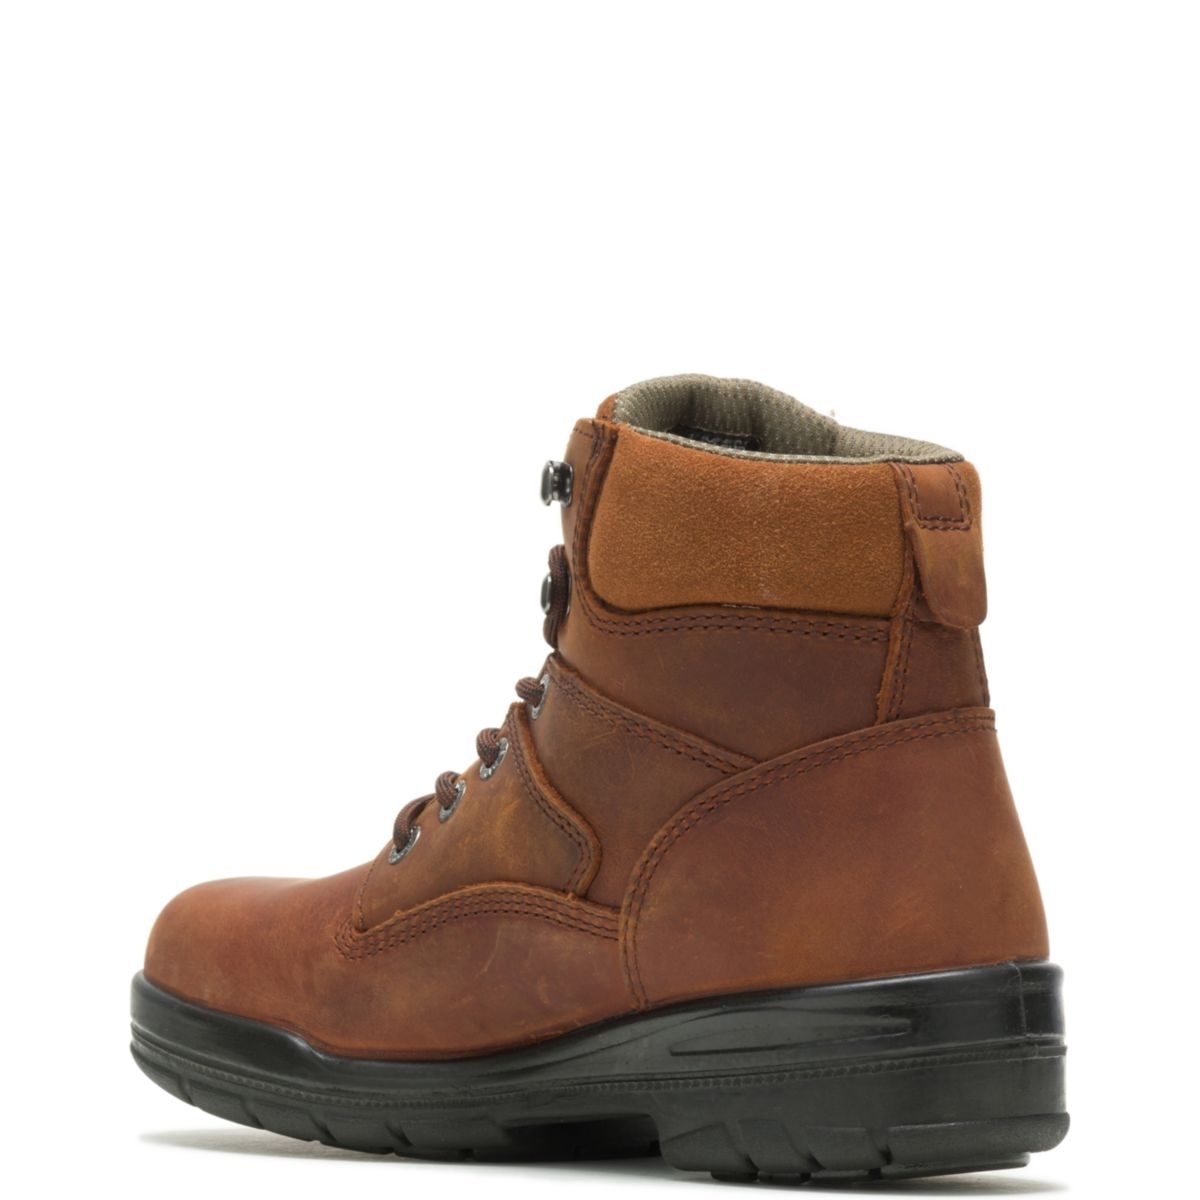 WOLVERINE Men's 6 DuraShocksÂ® Slip Resistant Steel Toe Work Boot Canyon - W02053 BRN/STL - BRN/STL, 13-EW